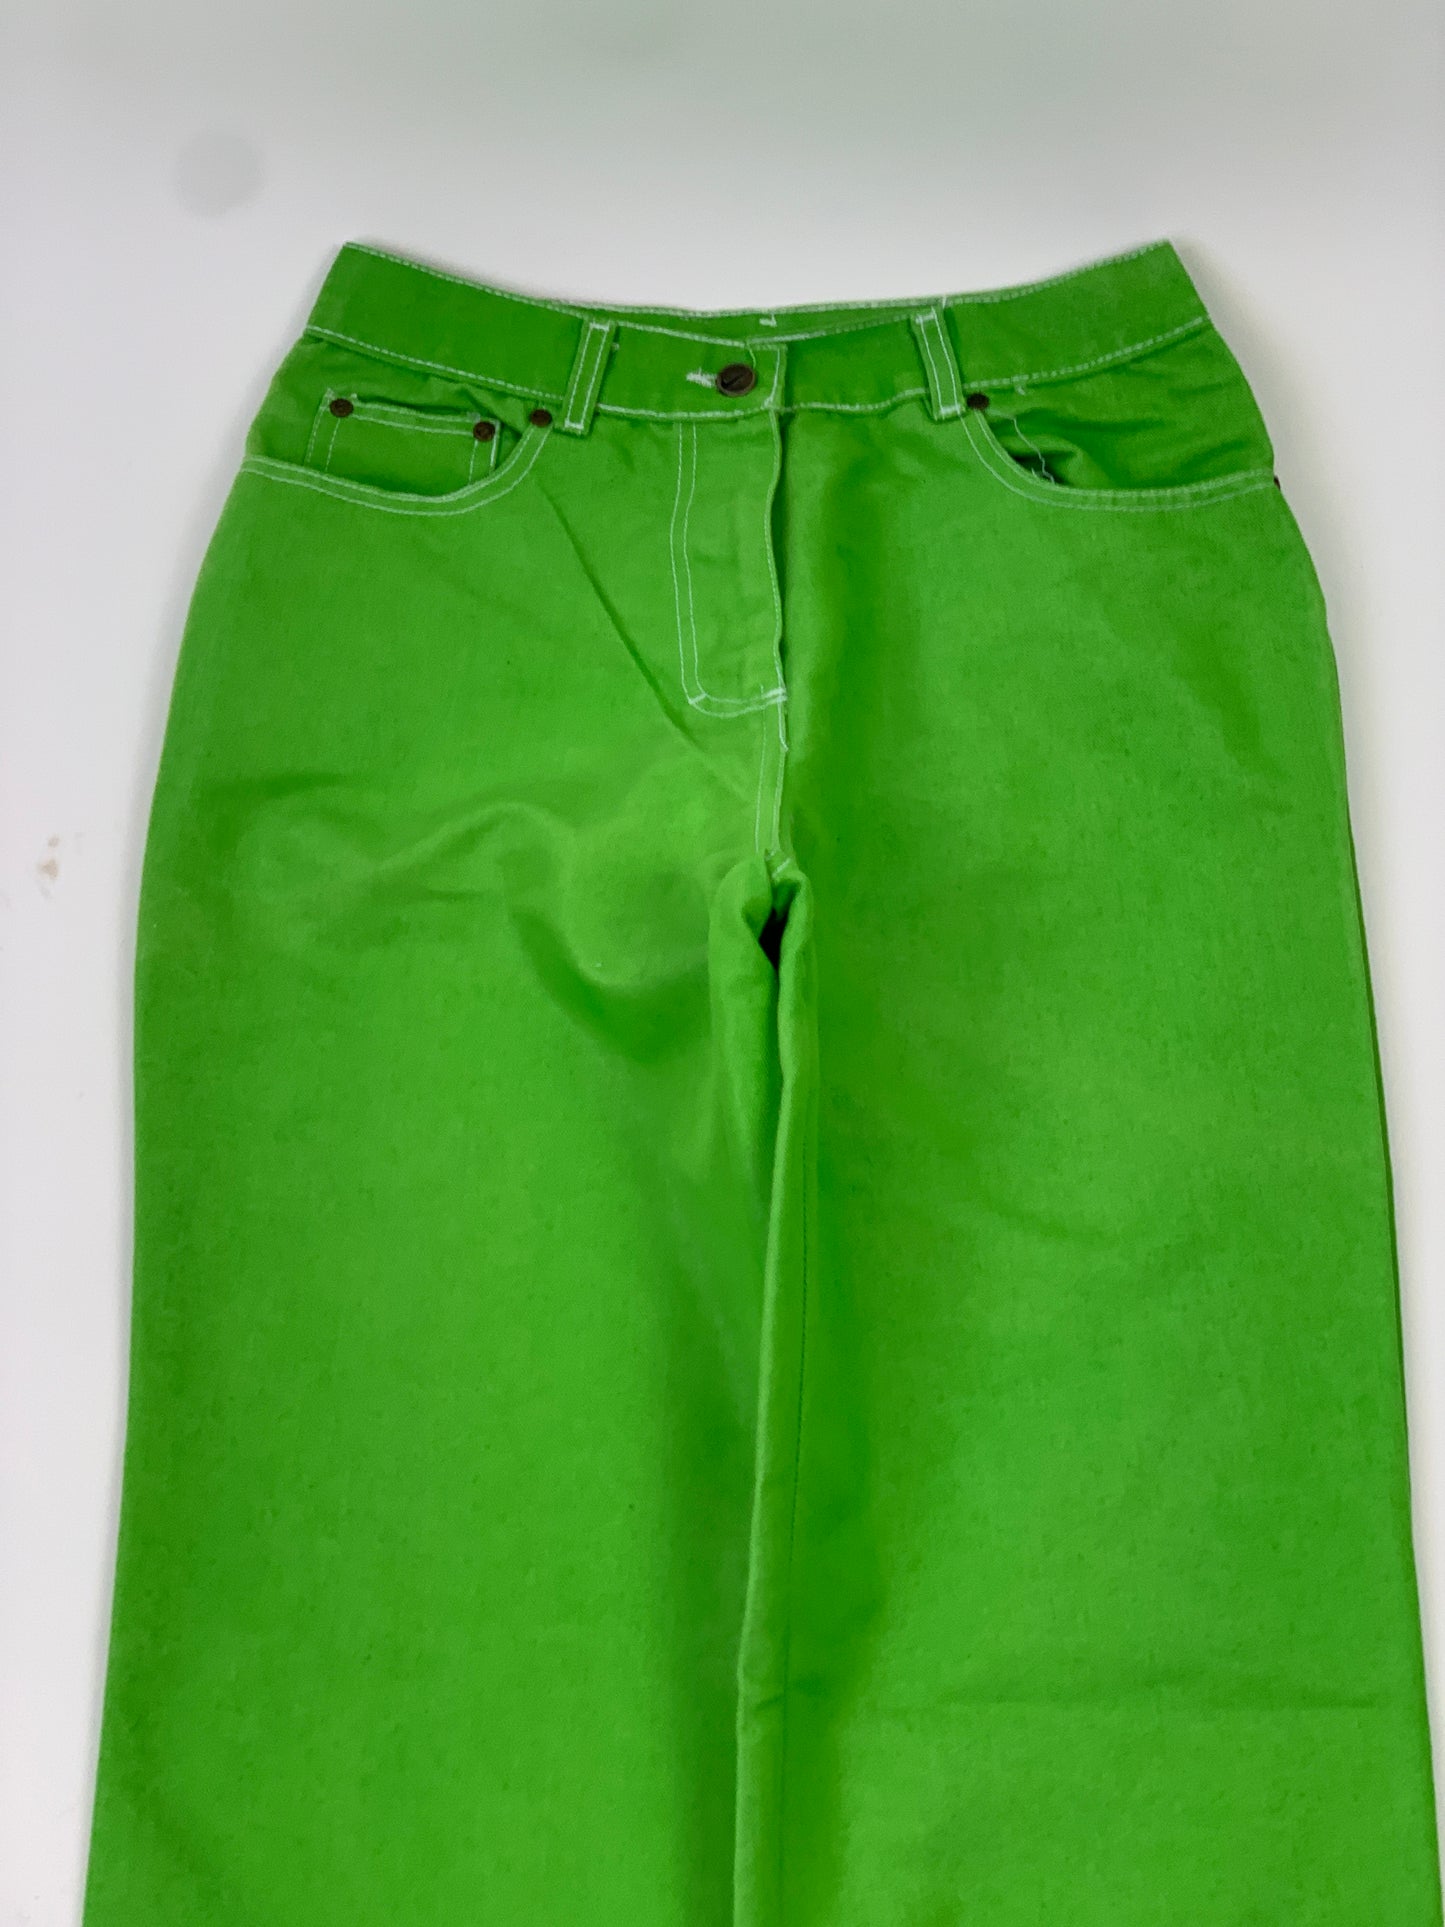 Nike Vintage Lime Jeans - 30